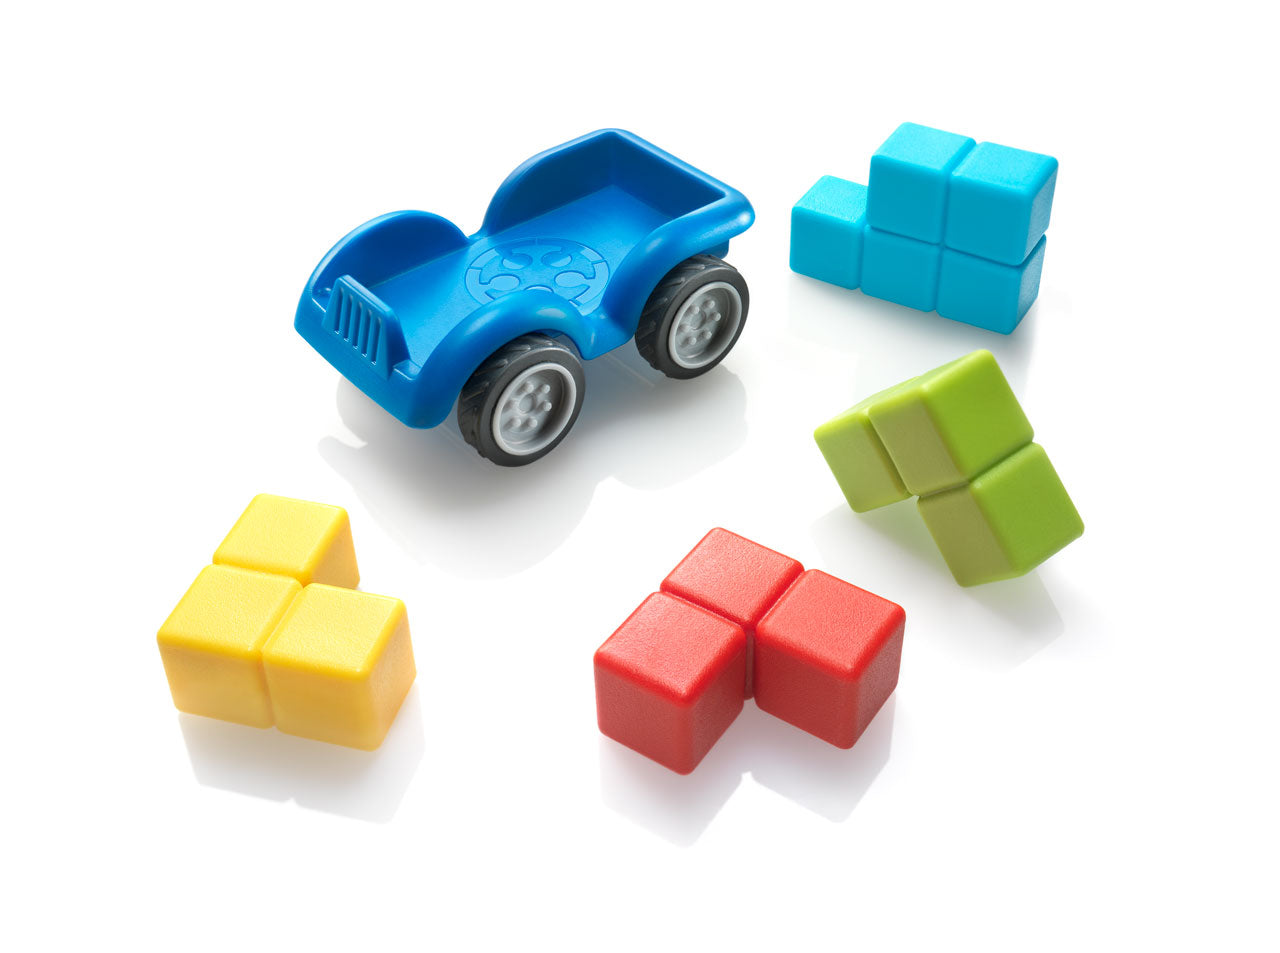 Smart Games | Smart Car Mini - 1 player game